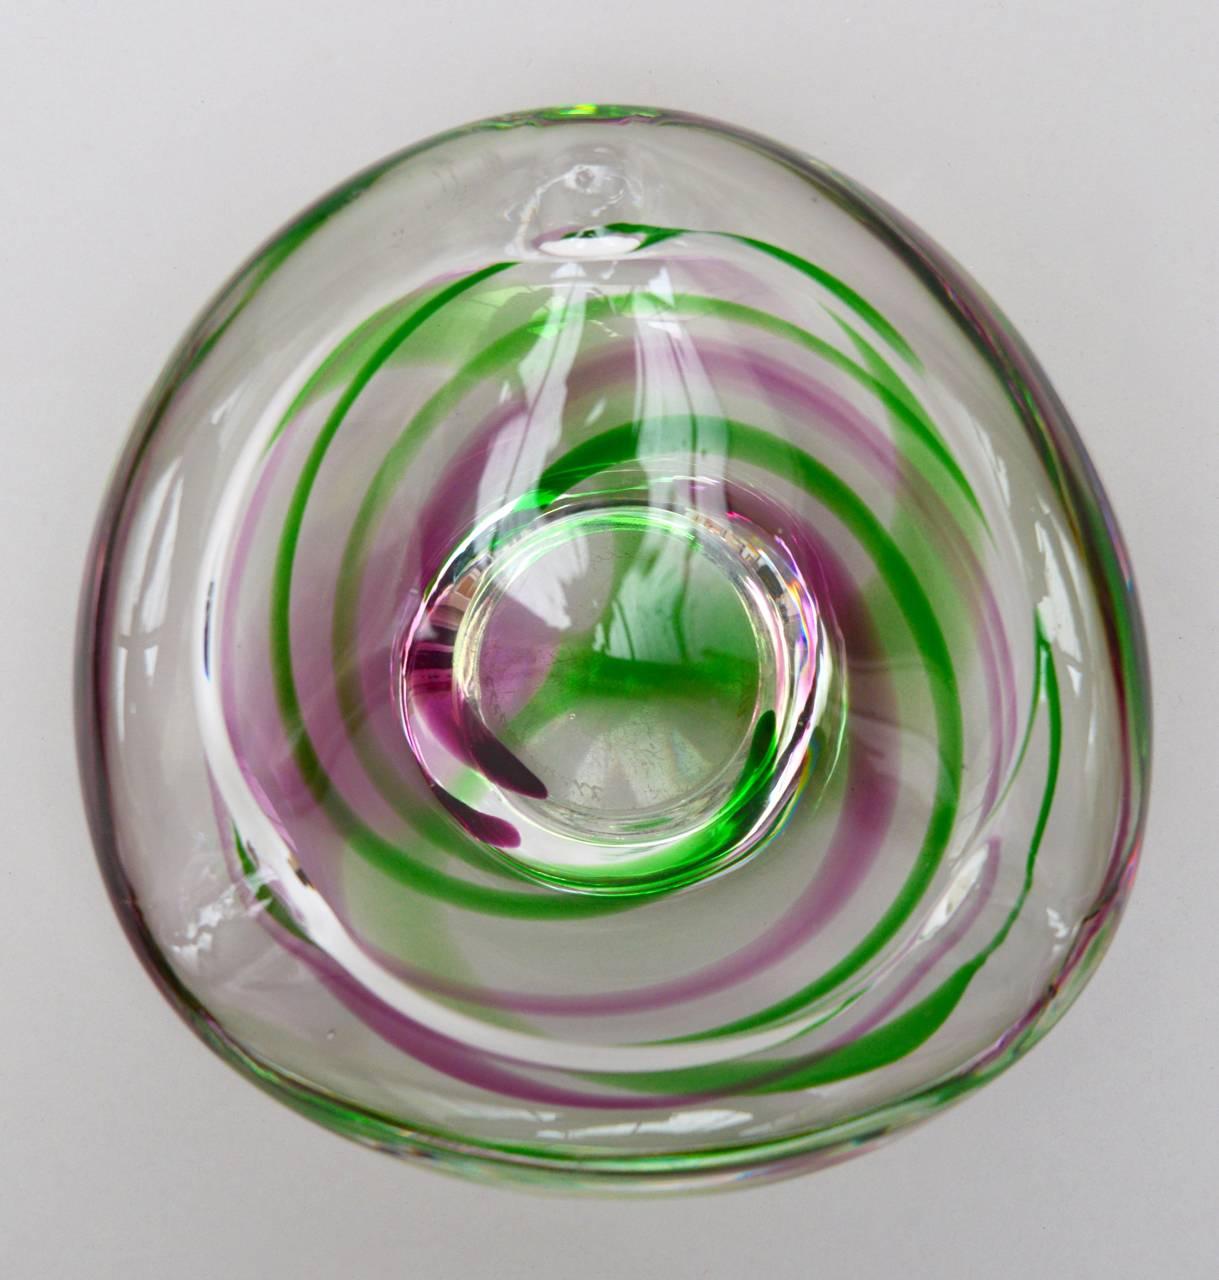 Italian Mid-Century Modern Murano Glass Bowl with Green & Lavender Swirl Design, Signed